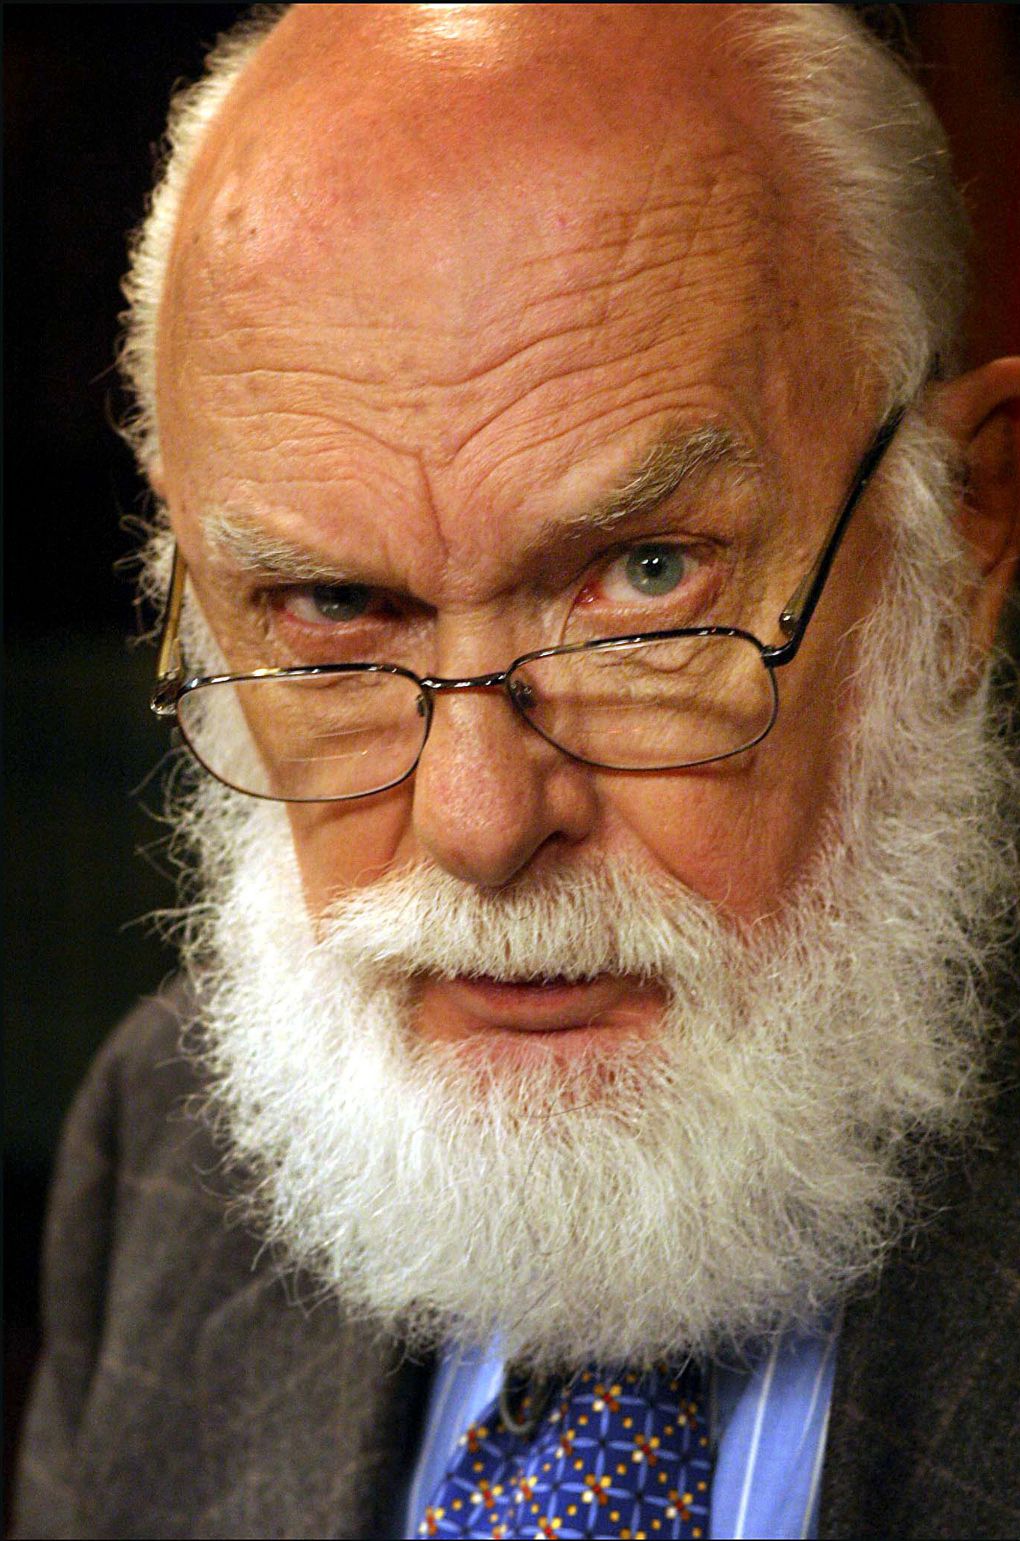 James Randi, whose educational foundation funds the Million Dollar Challenge.